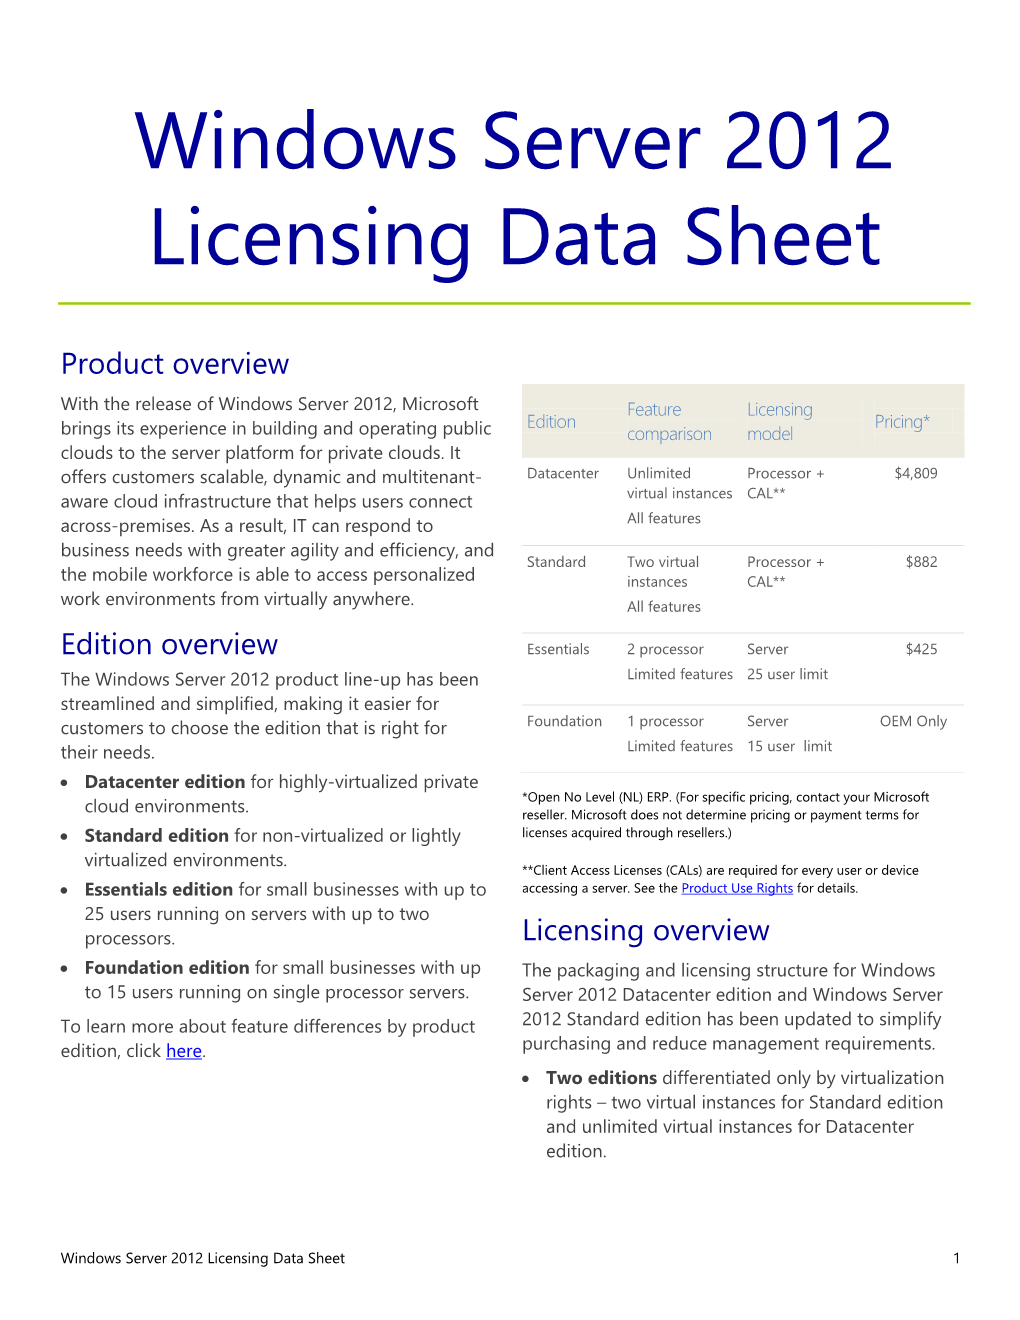 Windows Server 2012 Licensing Data Sheet